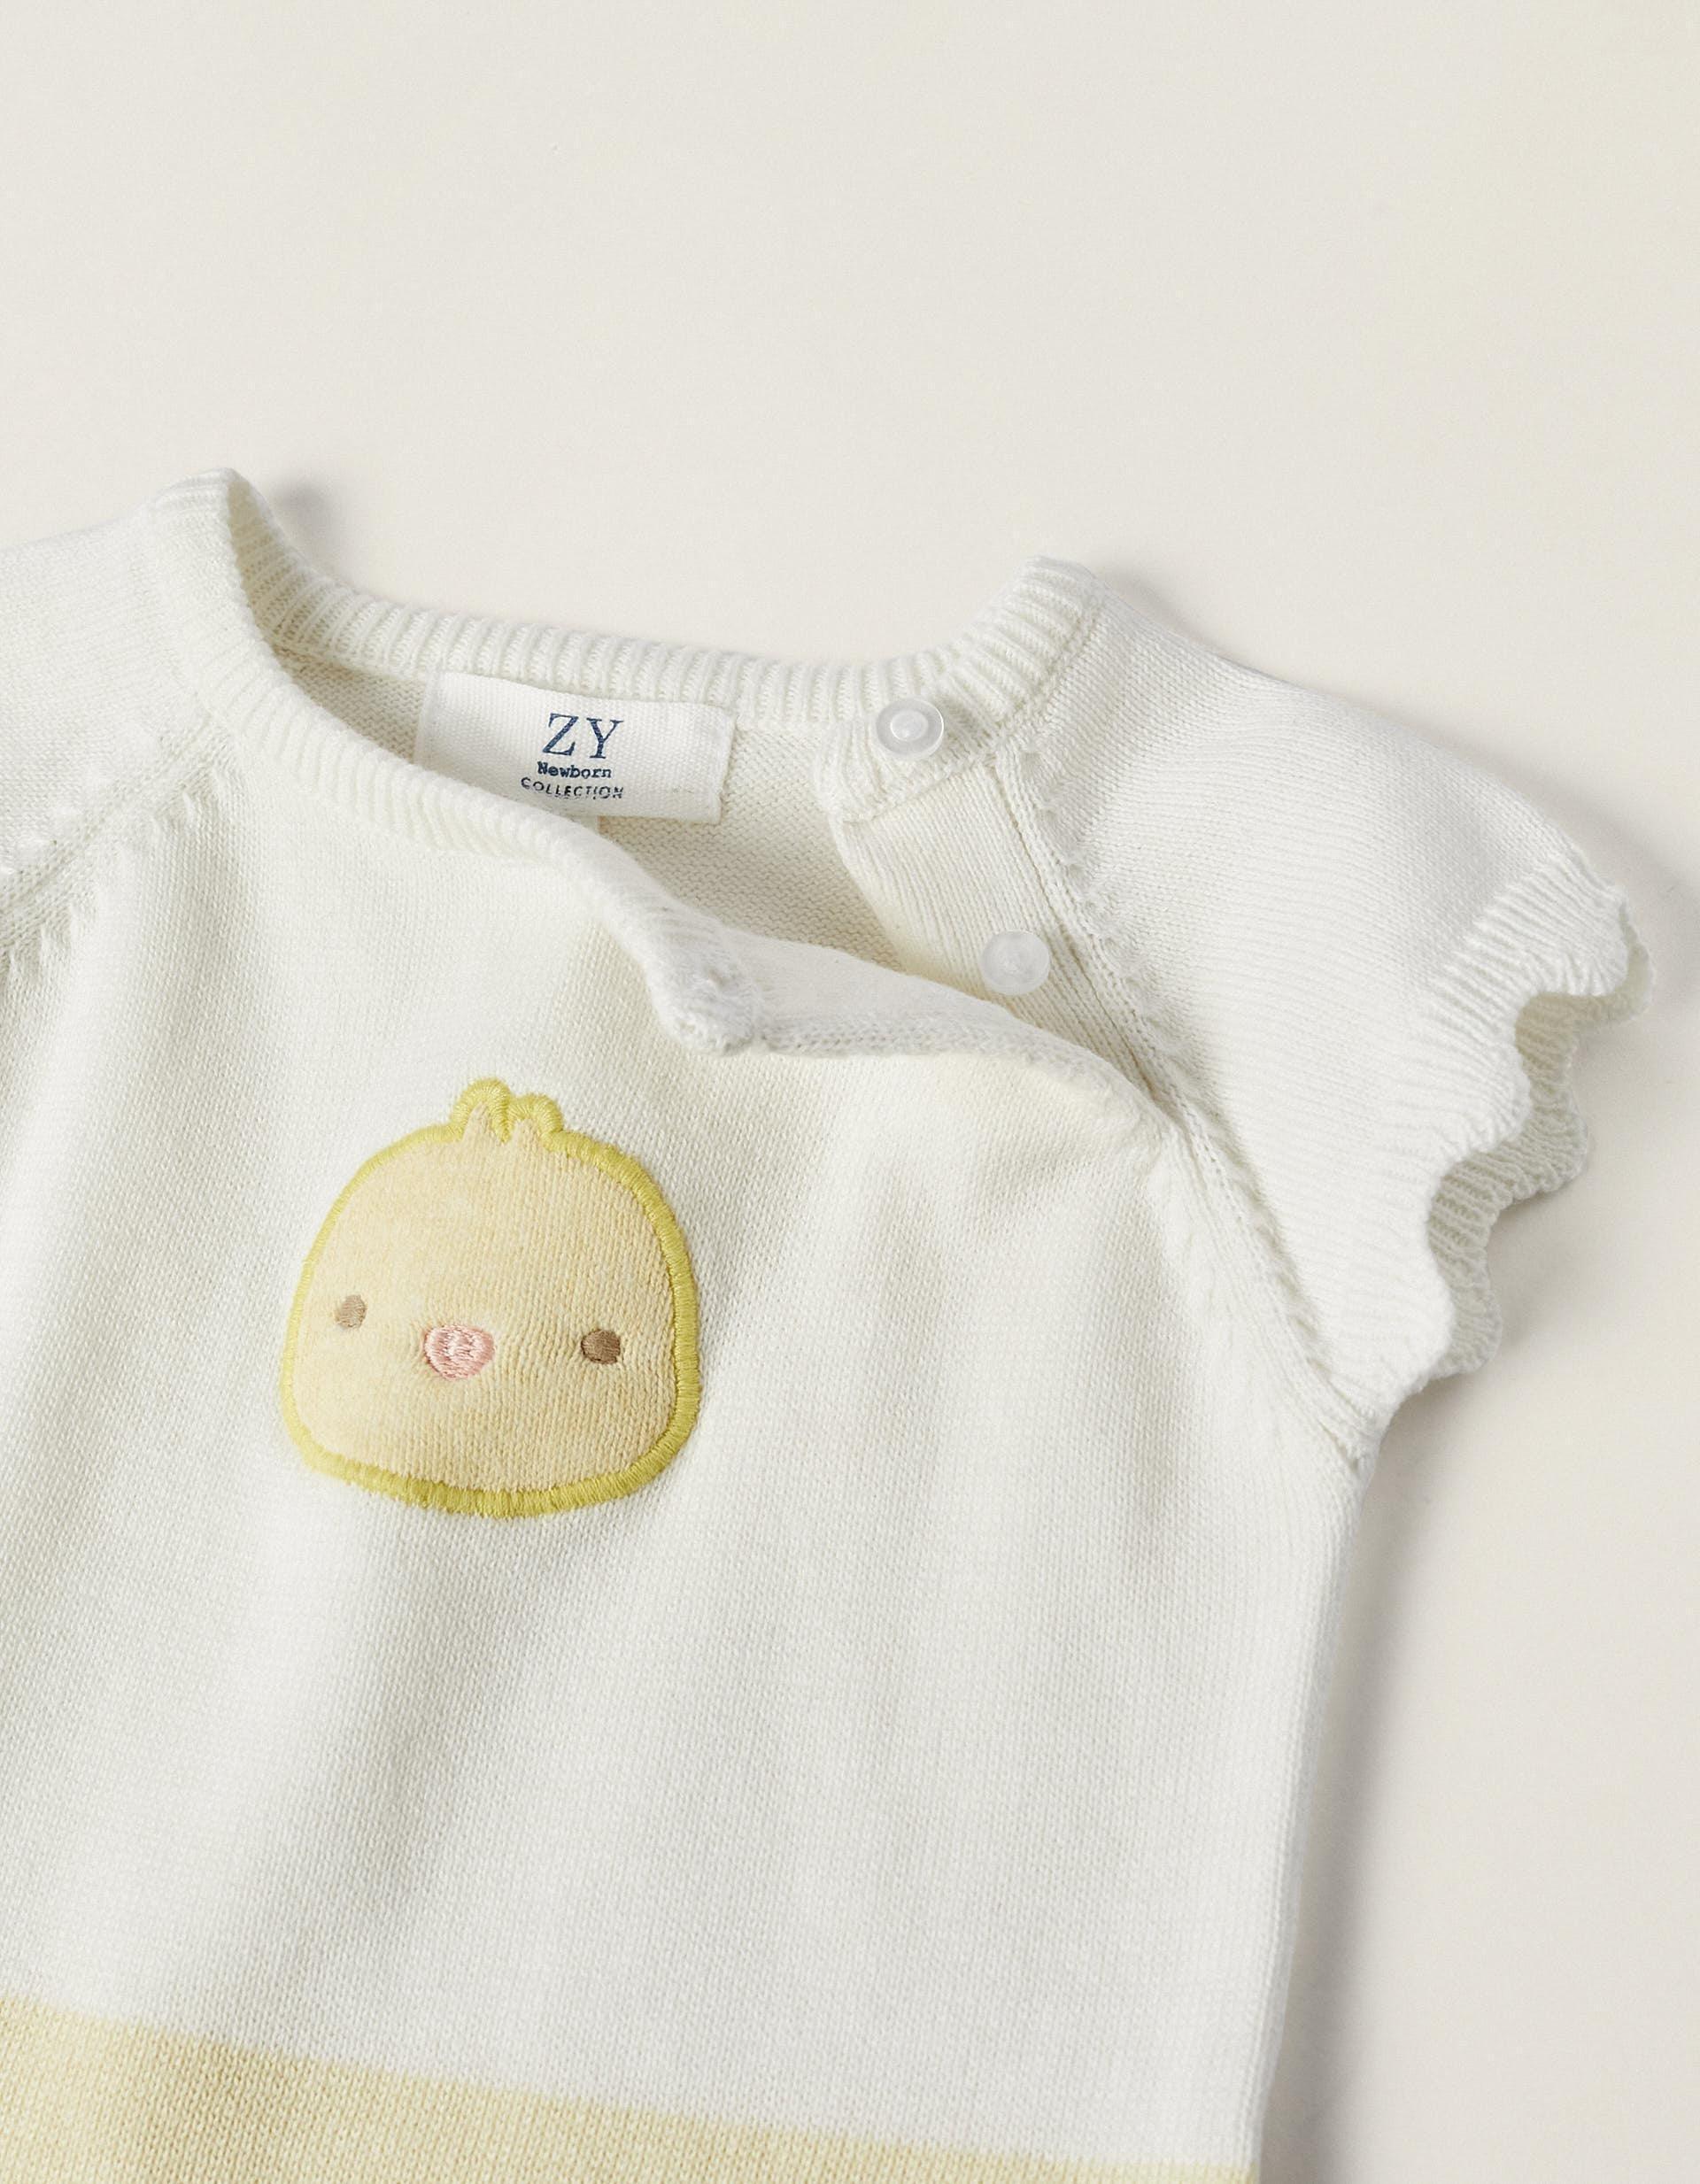 Zippy - Zippy Knit Jumpsuit For Newborns Little Chick